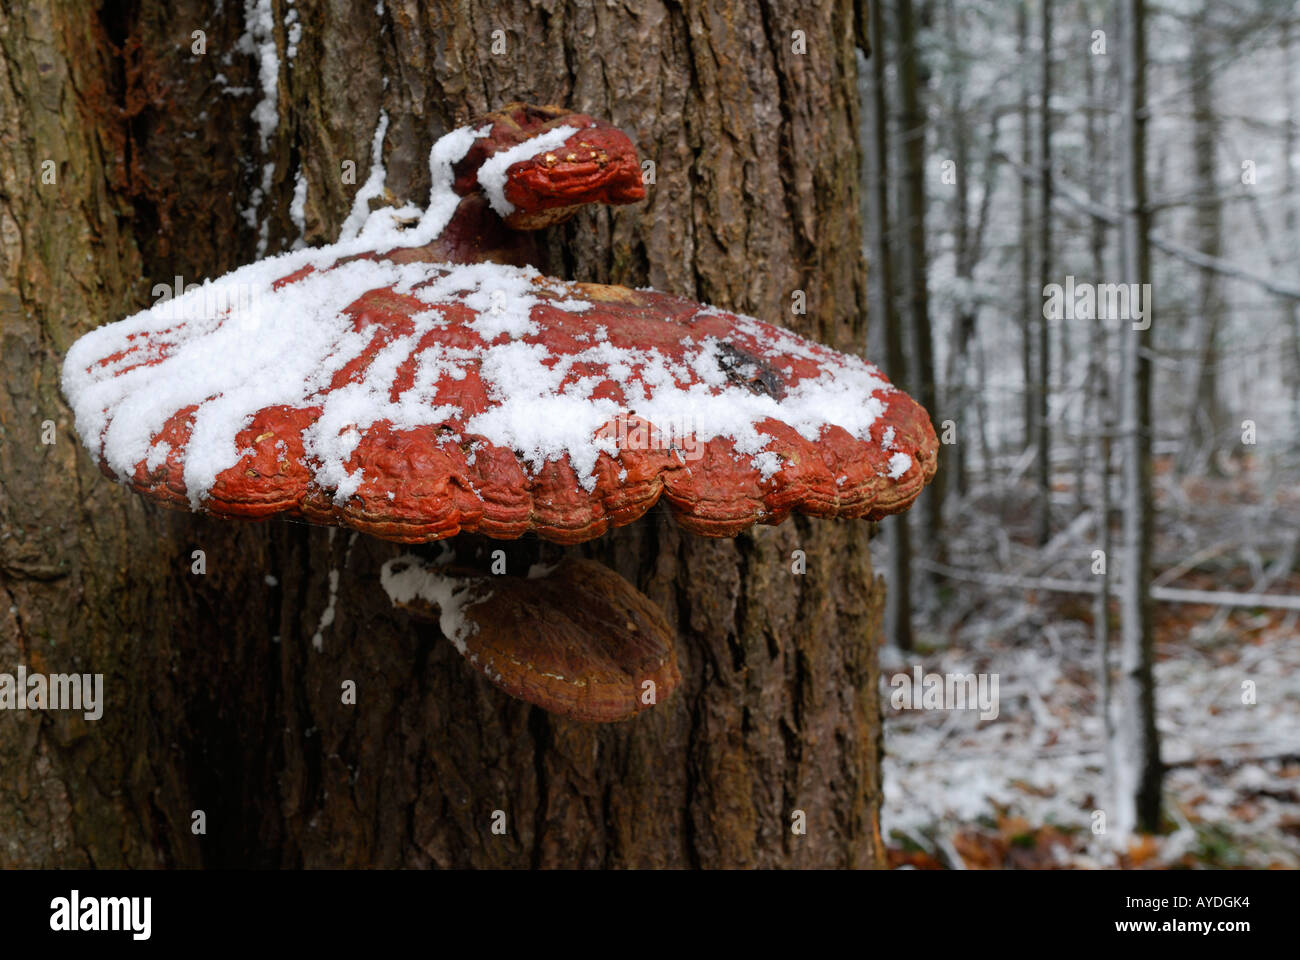 Red bracket fungus mushroom Fistulina hepatica on tree with fresh snow in an Ontario forest Stock Photo